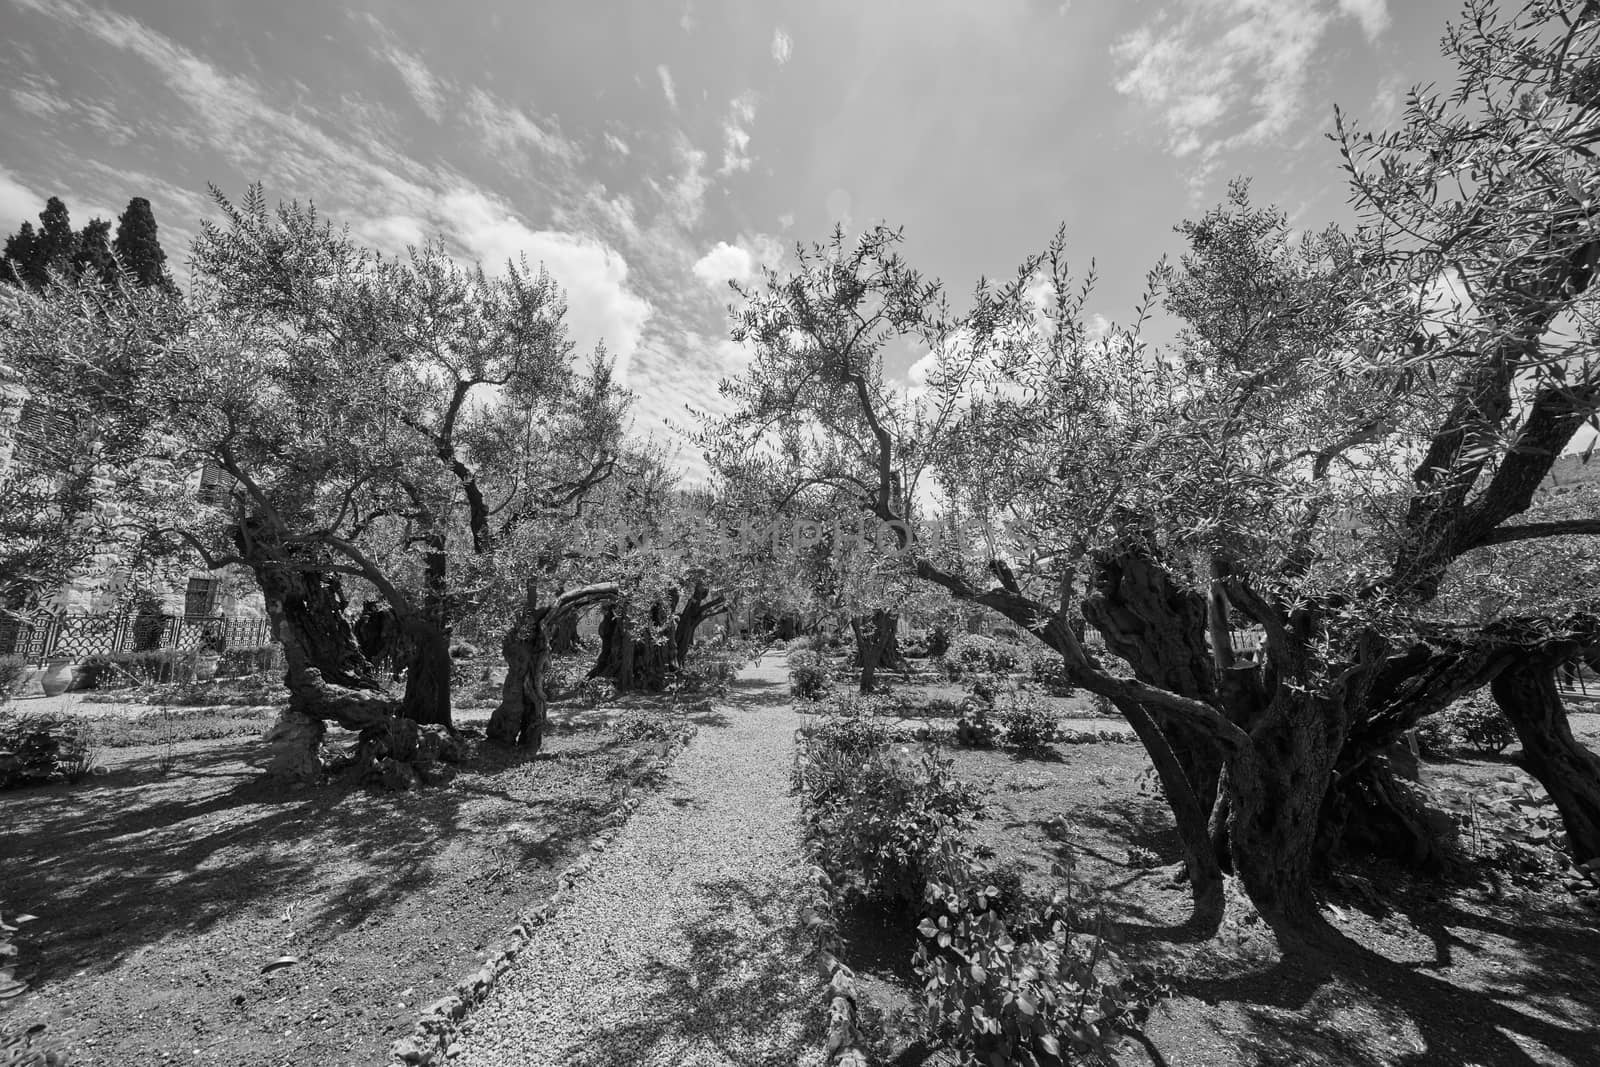 Gethsemane garden of olive trees  by rasika108